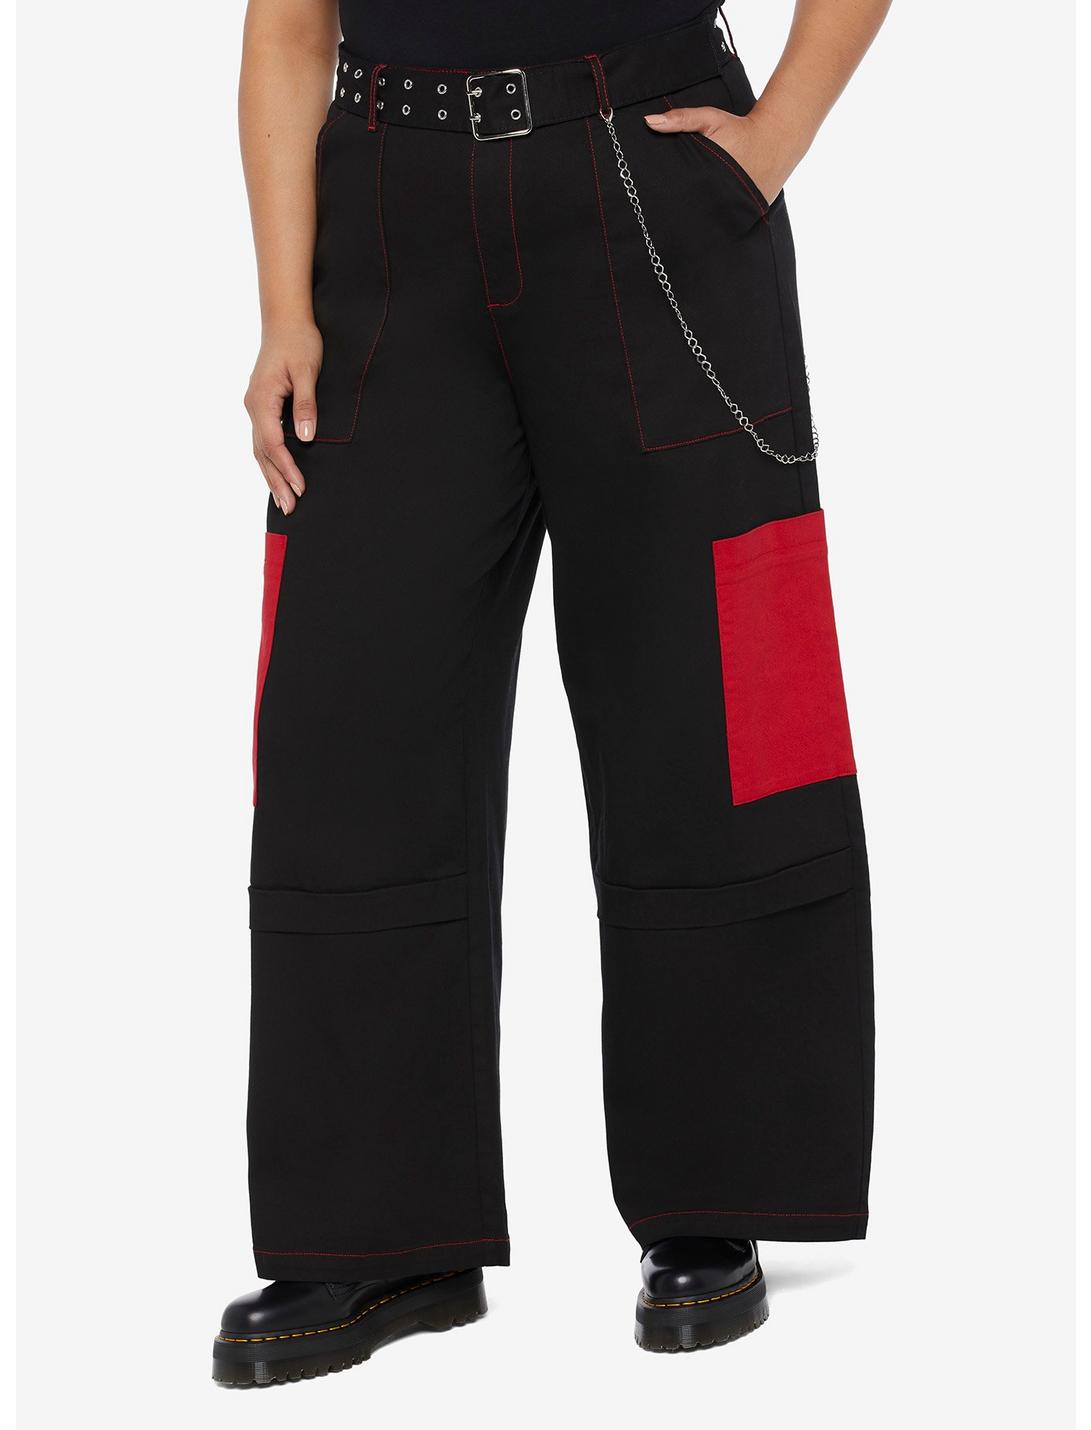 Black & Red Straight Leg Cargo Pants Plus Size, BLACK, hi-res